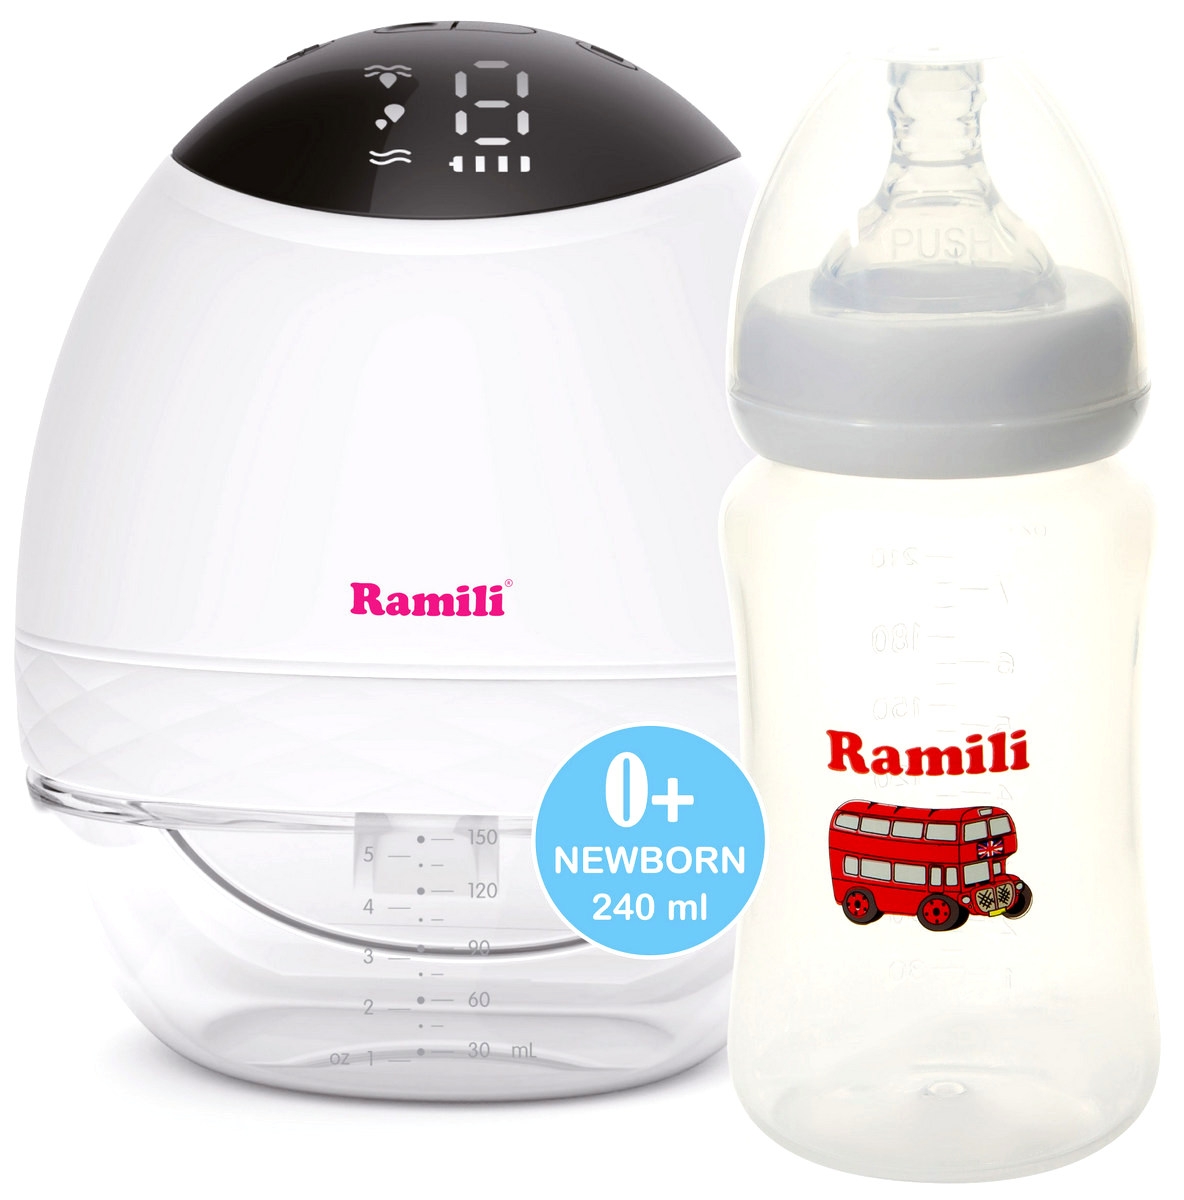     Ramili SE500   240 